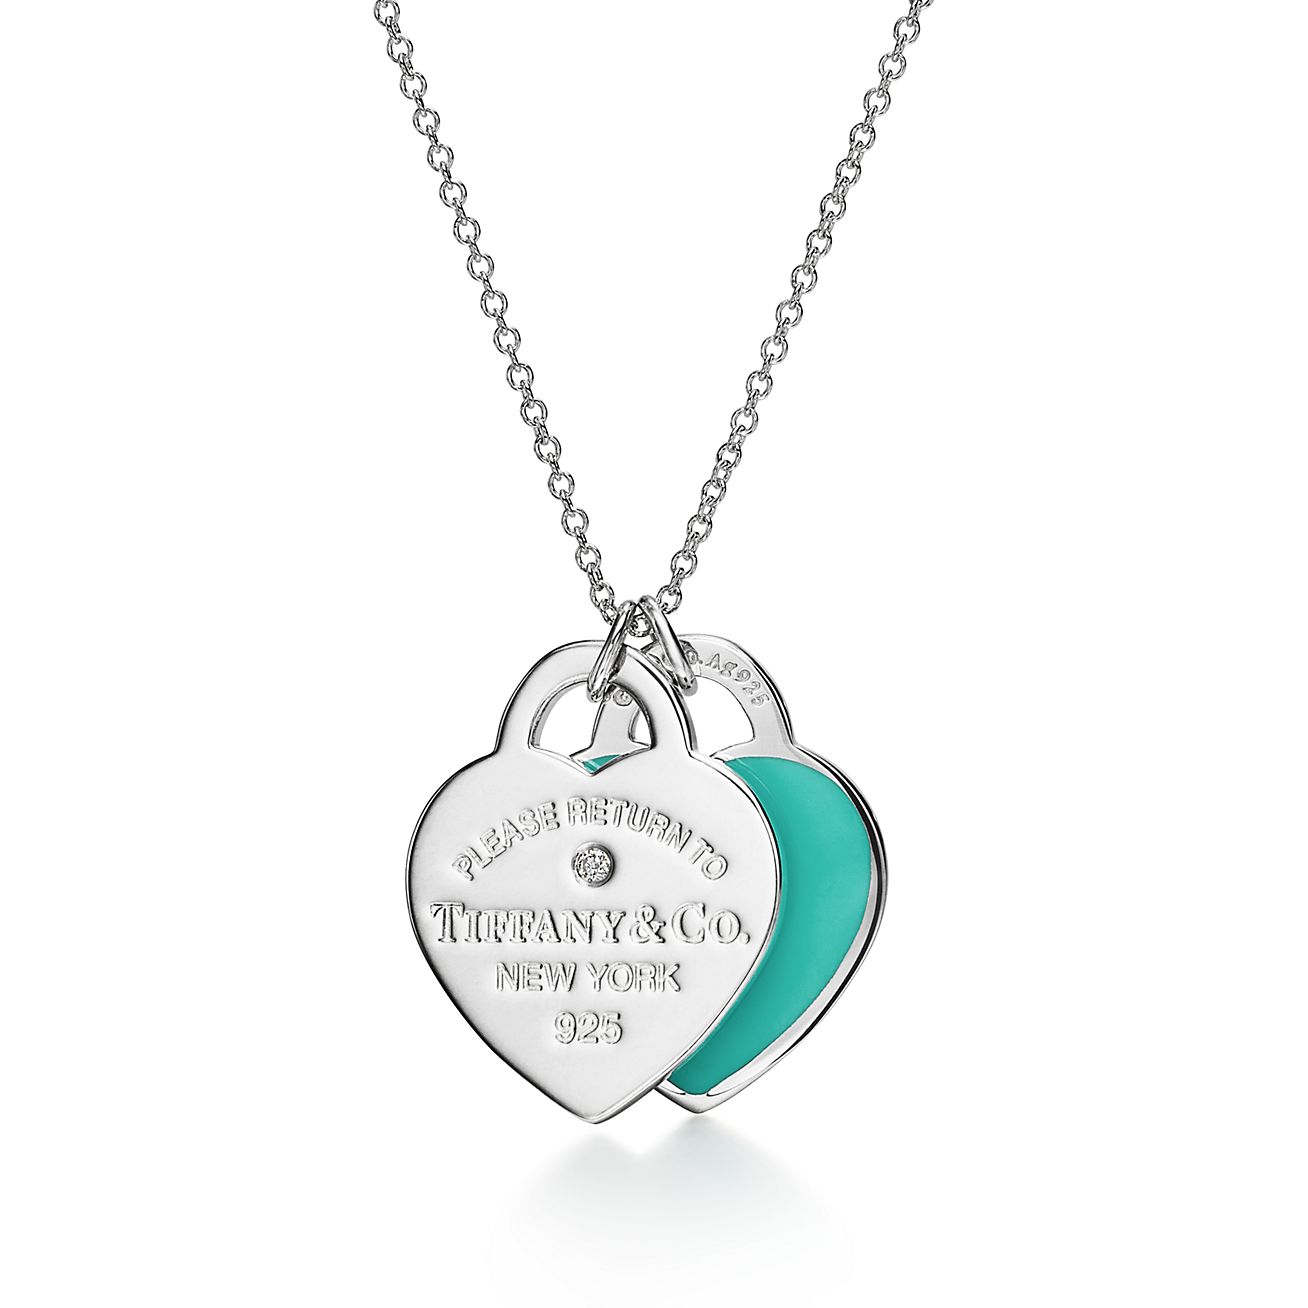 TIFFANY & Co. Return to Mini Double Heart Pendant Necklace Enamel Blue